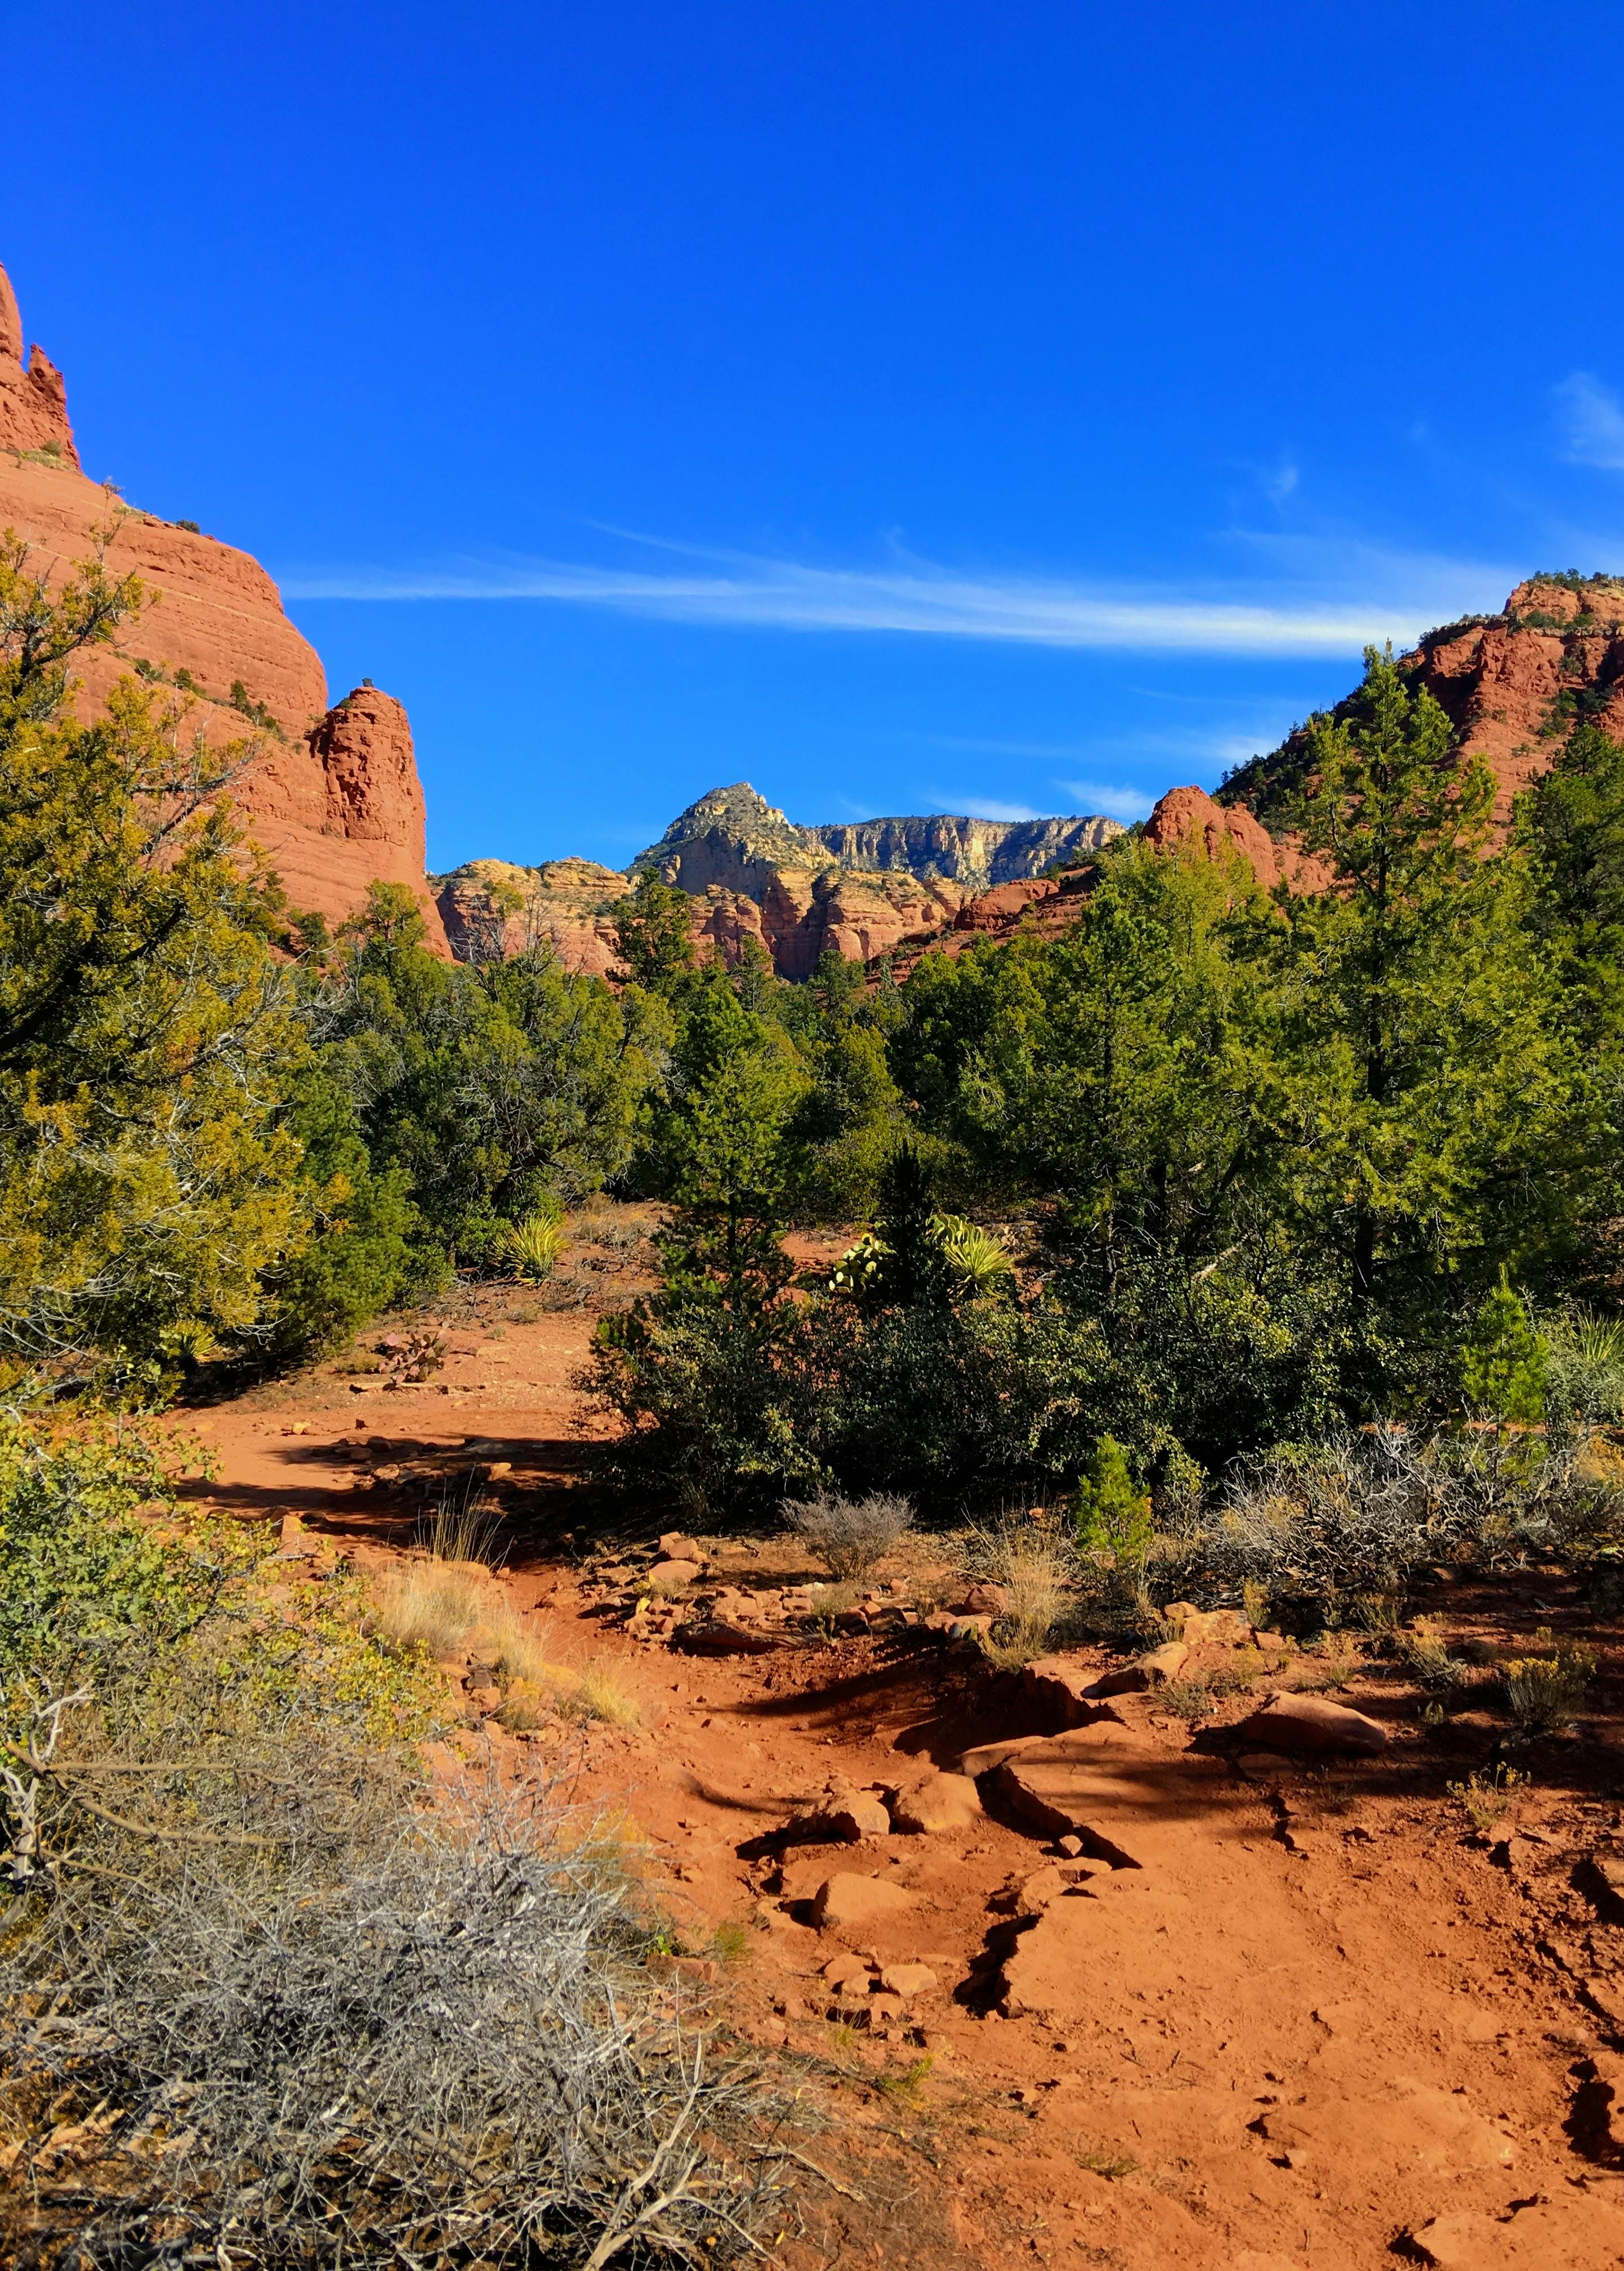 A trail through the Sedona, Arizona landscape.